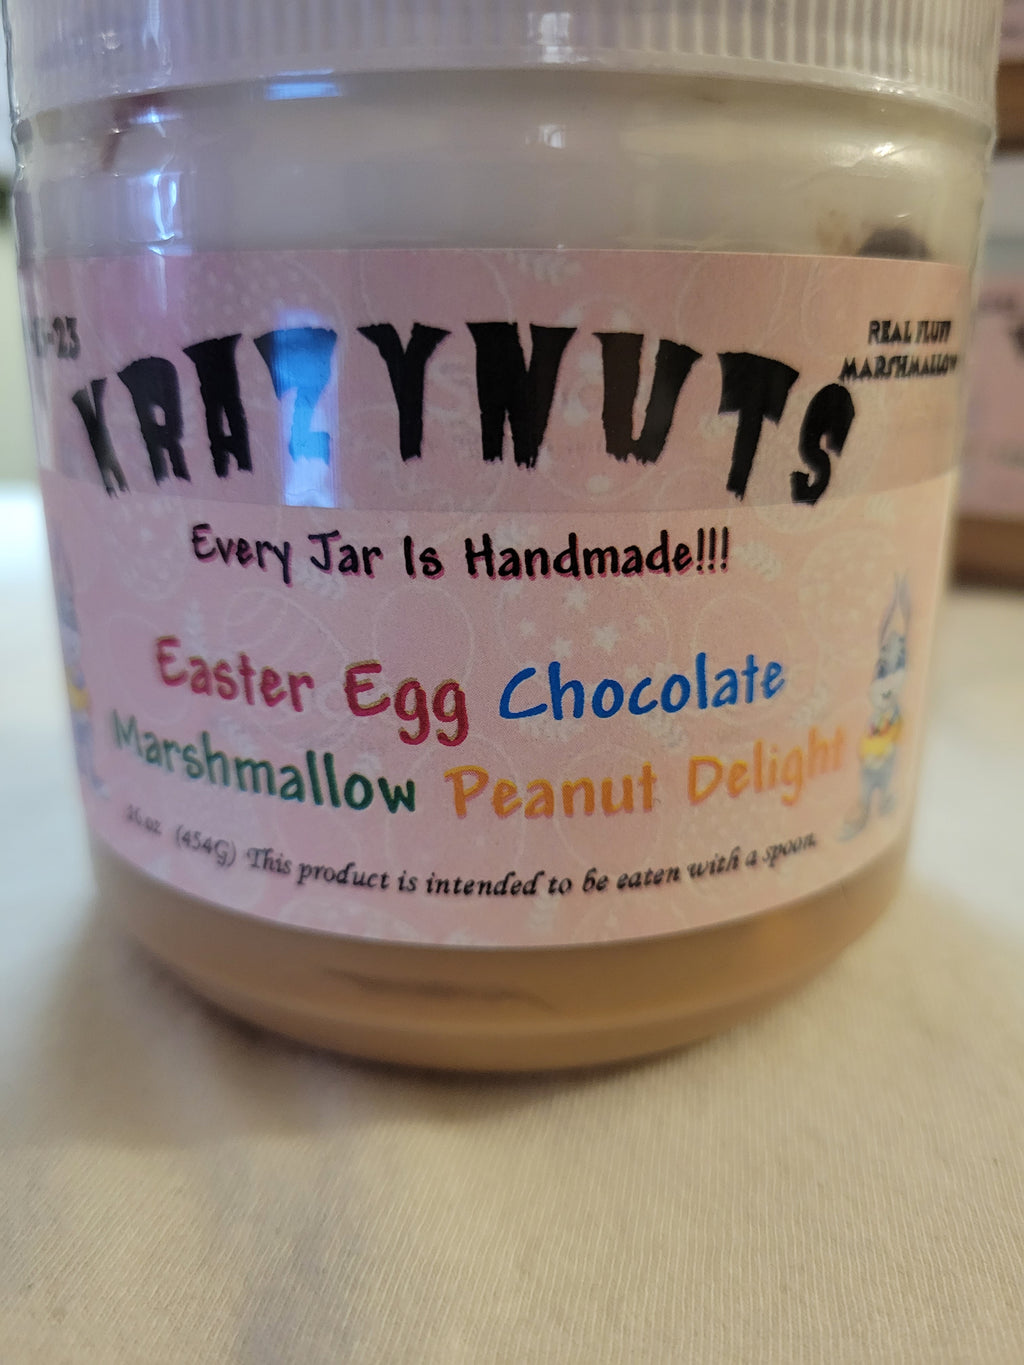 Easter Egg Chocolate Marshmallow Peanut Delight